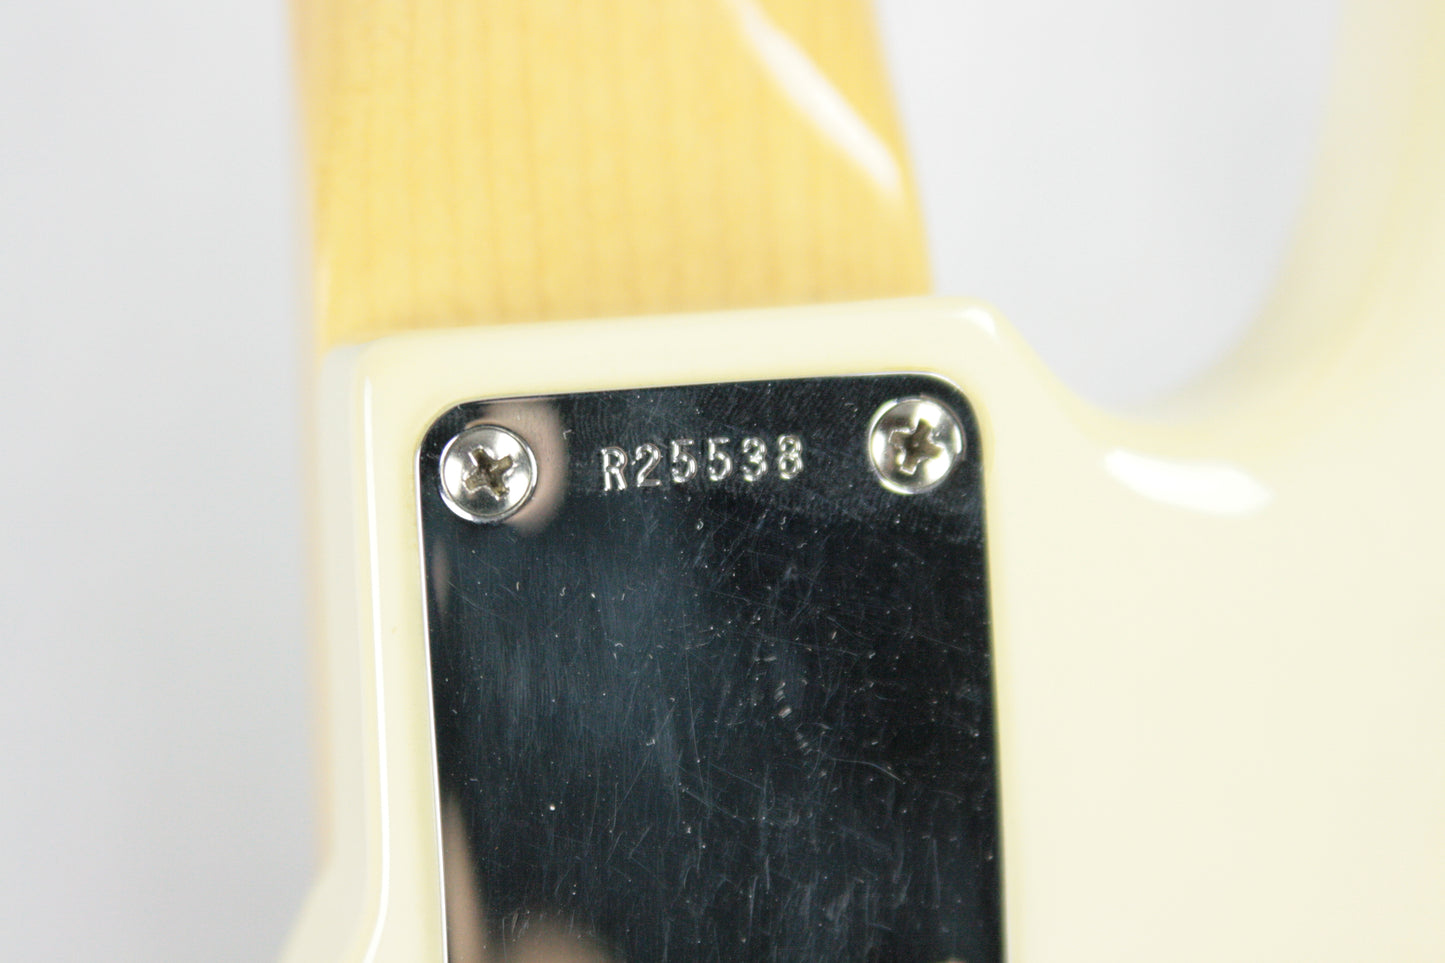 2005 Fender Custom Shop 64 Reissue Jazz Bass! BRAZILIAN ROSEWOOD 1964 Olympic White